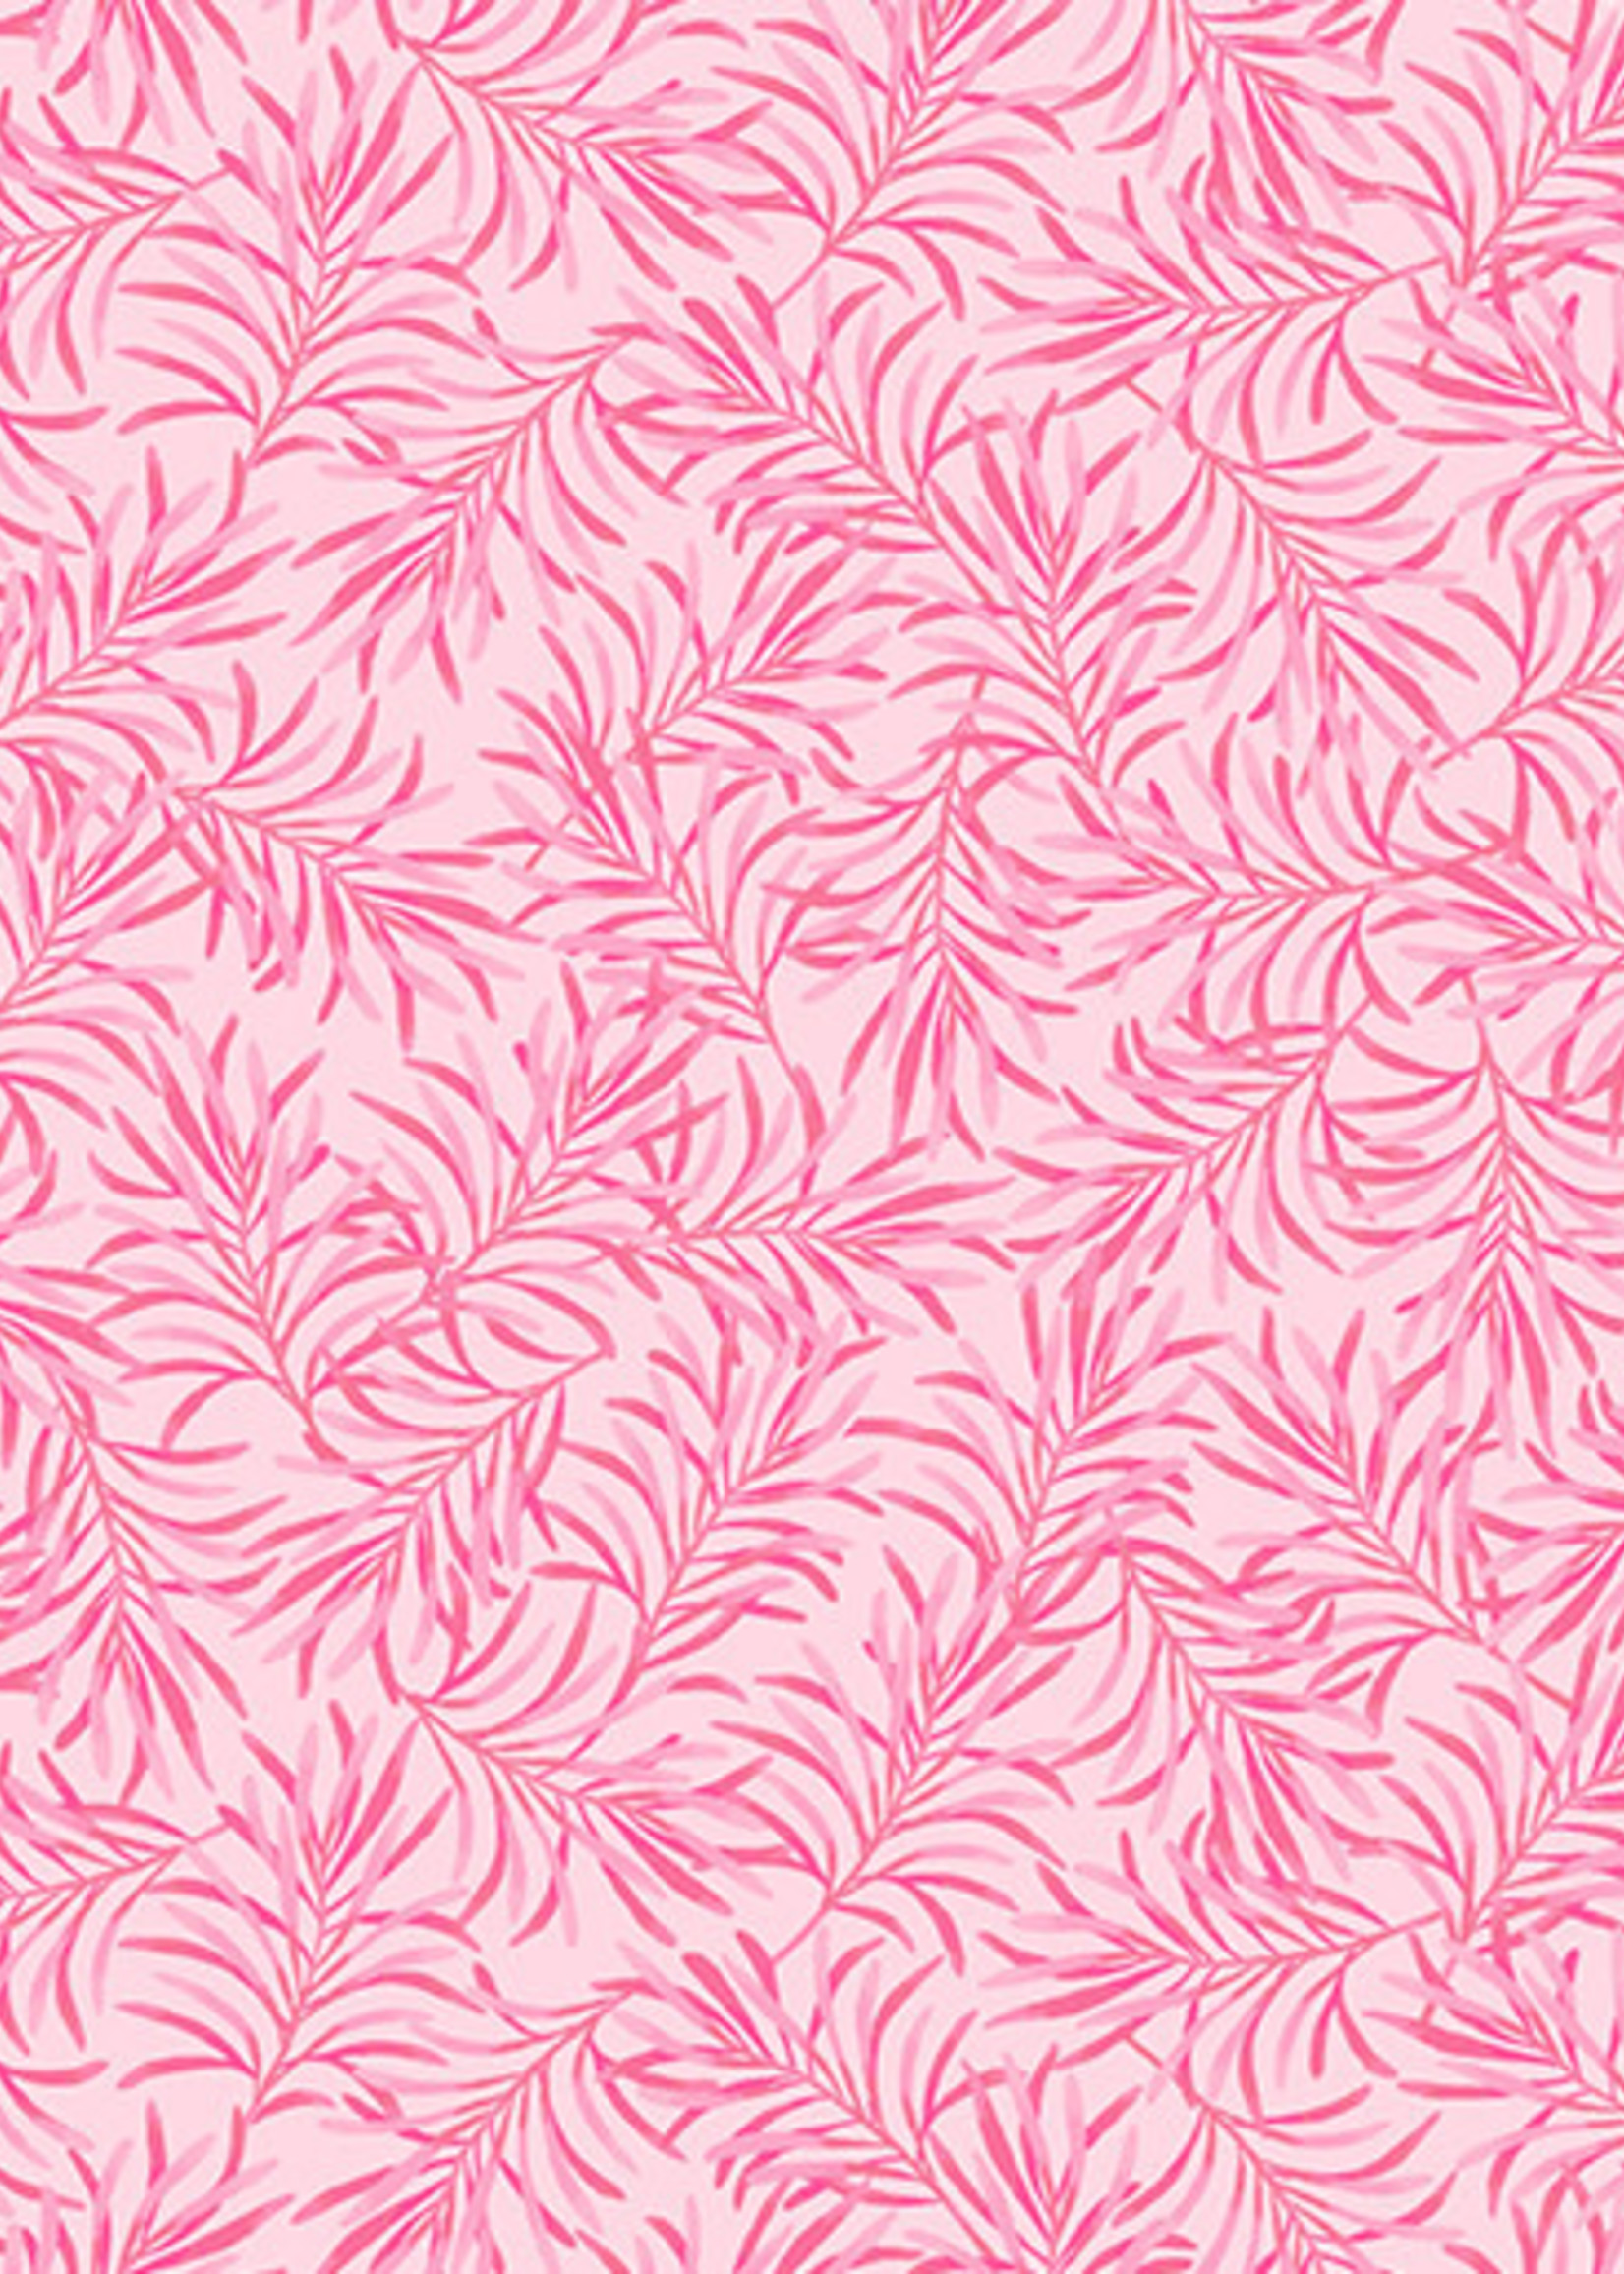 Benartex Studio Boughs of Beauty - Carnation Pink